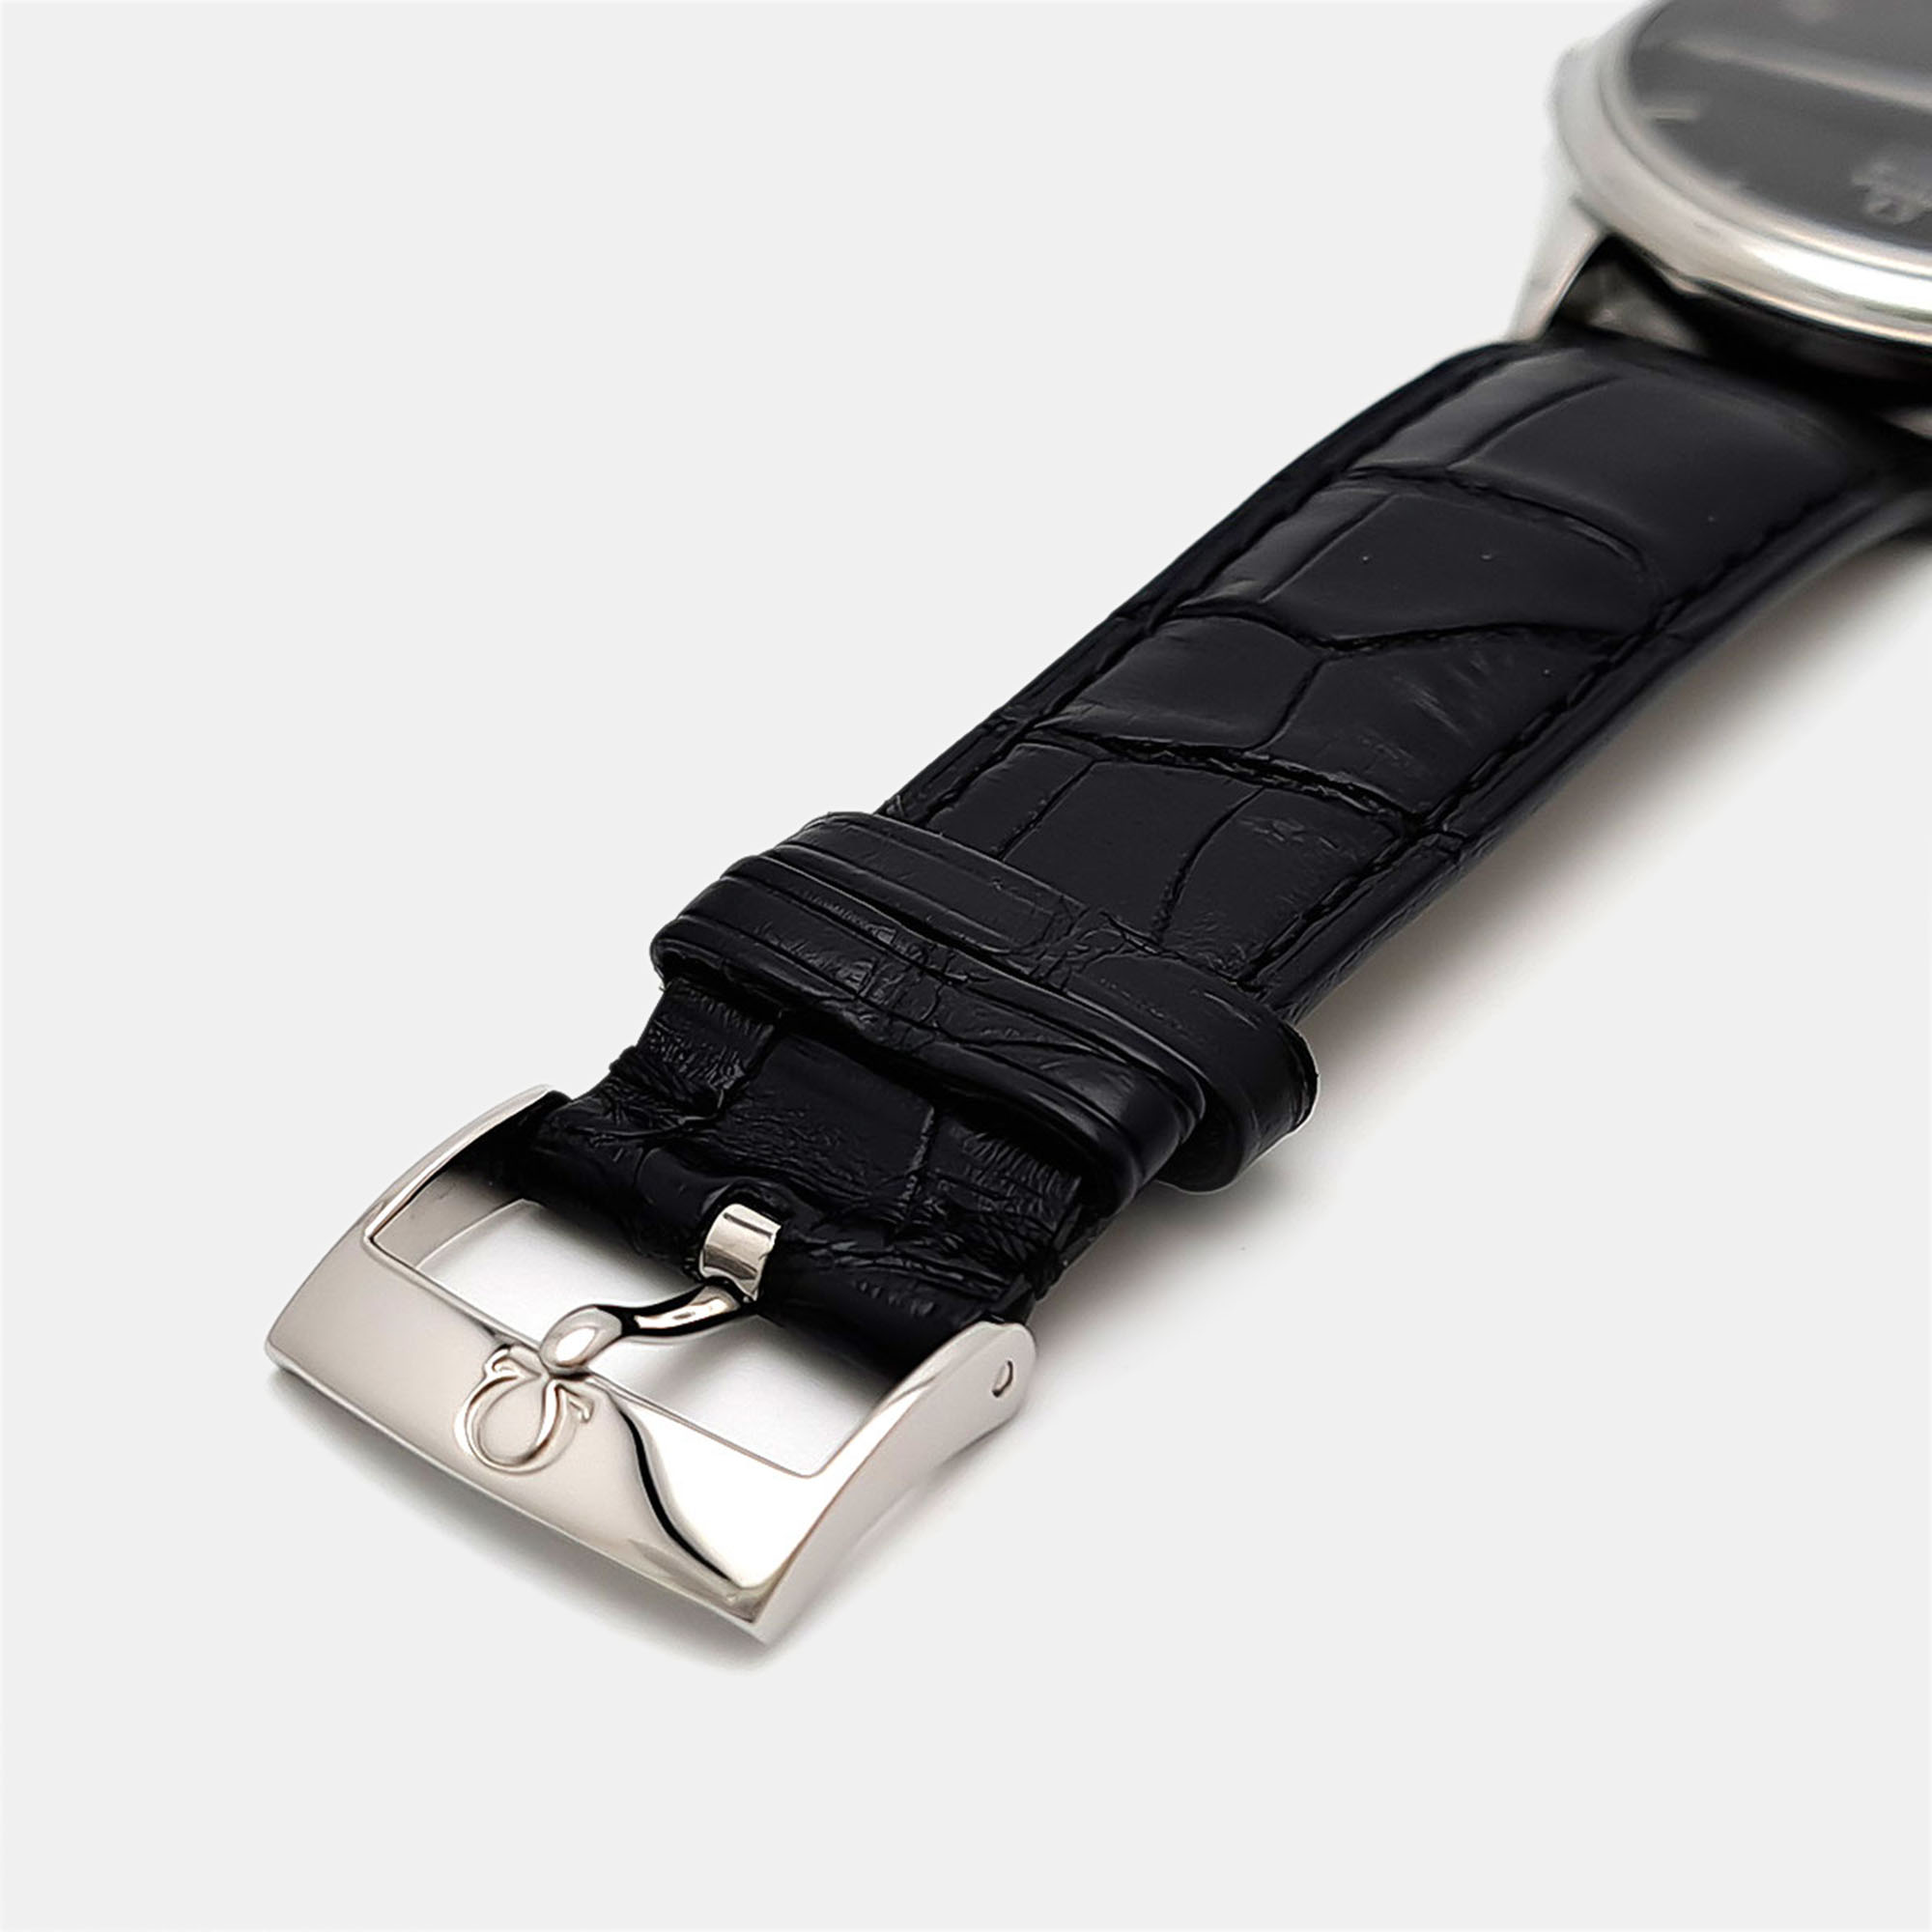 Omega Black Stainless Steel De Ville 4813.50.01 Automatic Men's Wristwatch 38 Mm